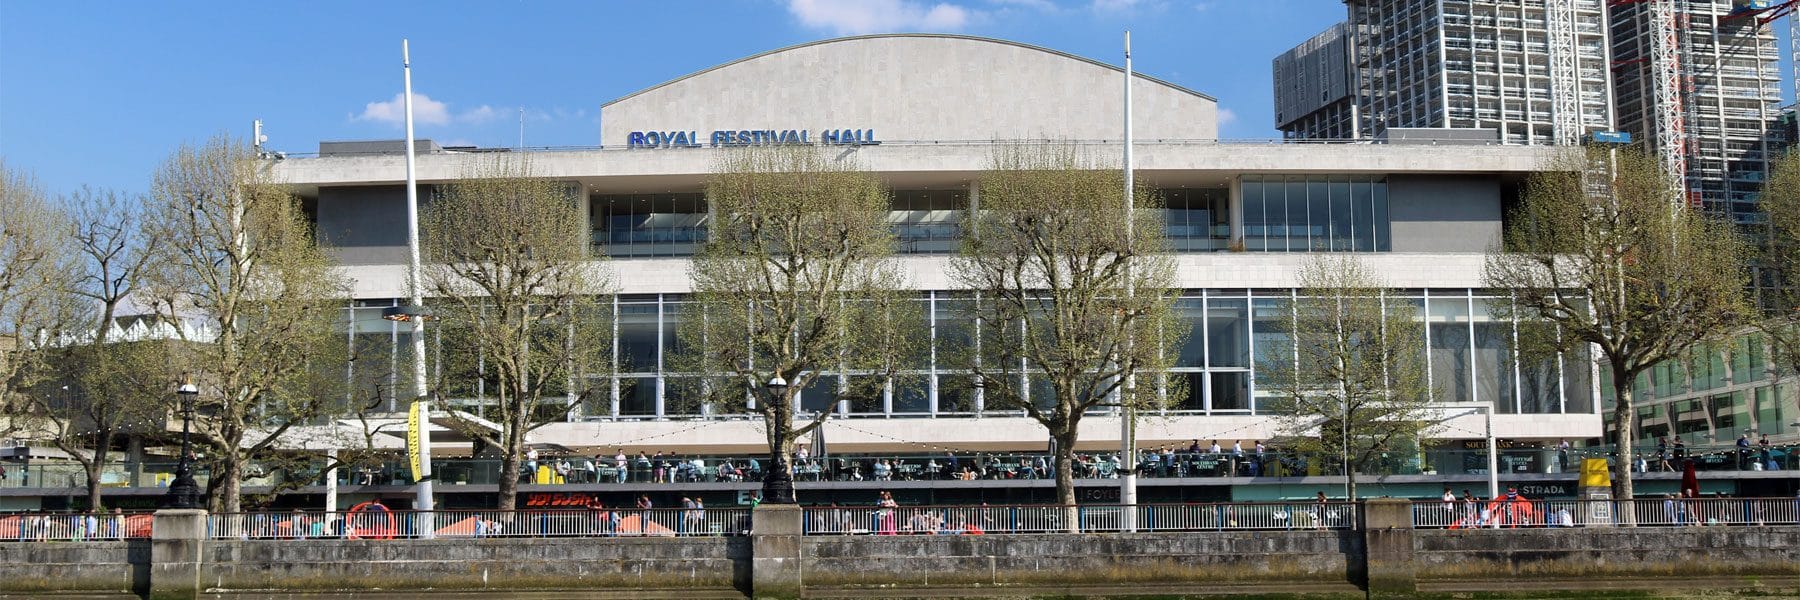 Royal Festival Hall, Southbank Centre